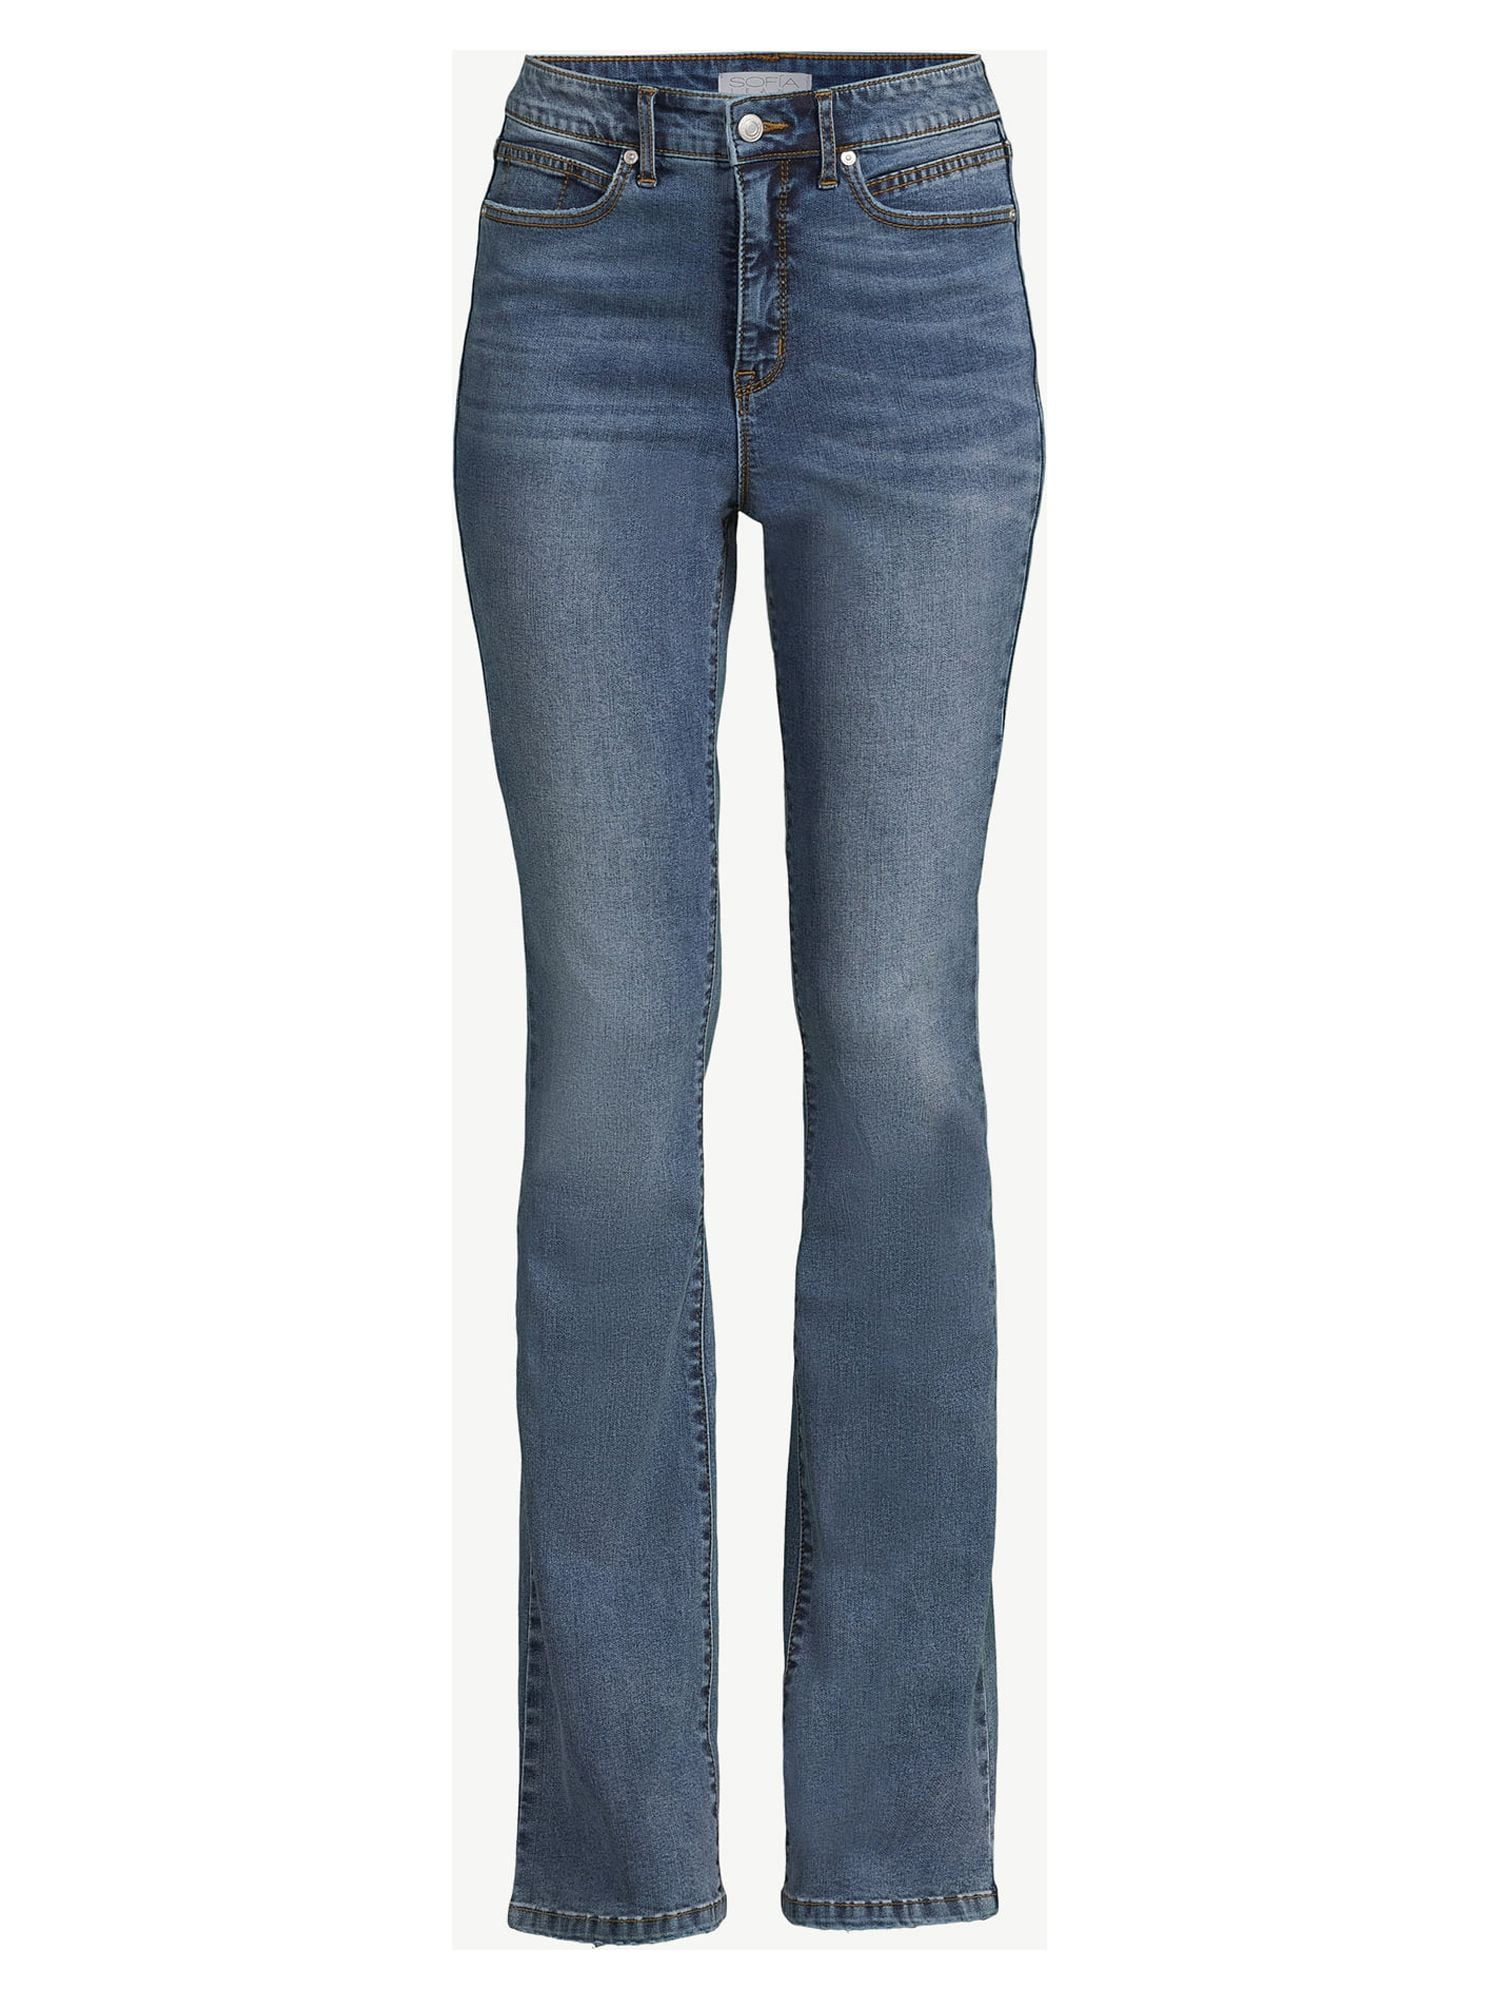 Sofia Jeans Women's Marisol Curvy Bootcut Super High Rise Jeans